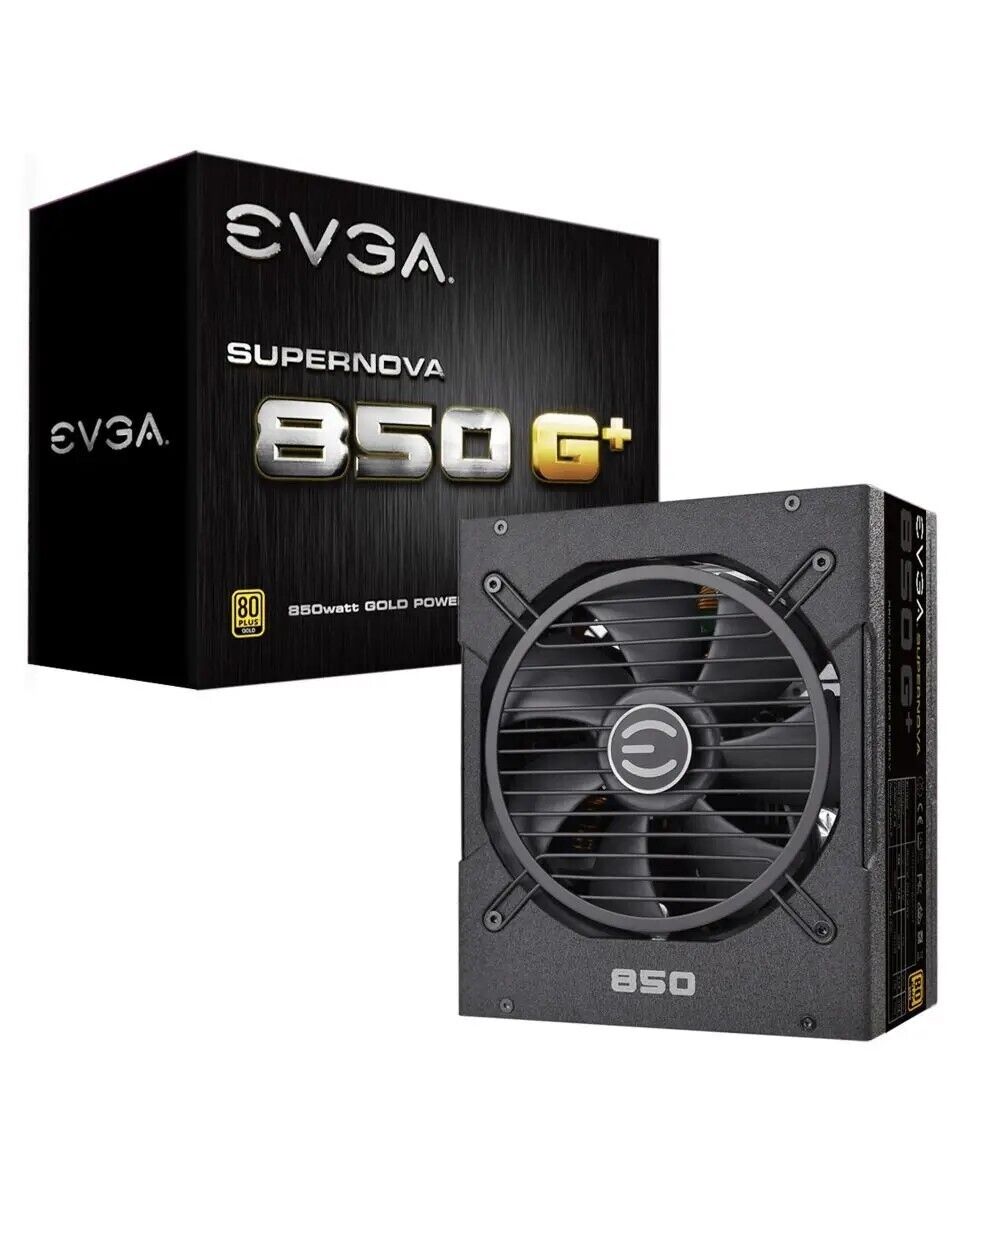 EVGA SUPERNOVA 850 G+ 850W 80 Plus Gold Fully Modular Power Supply